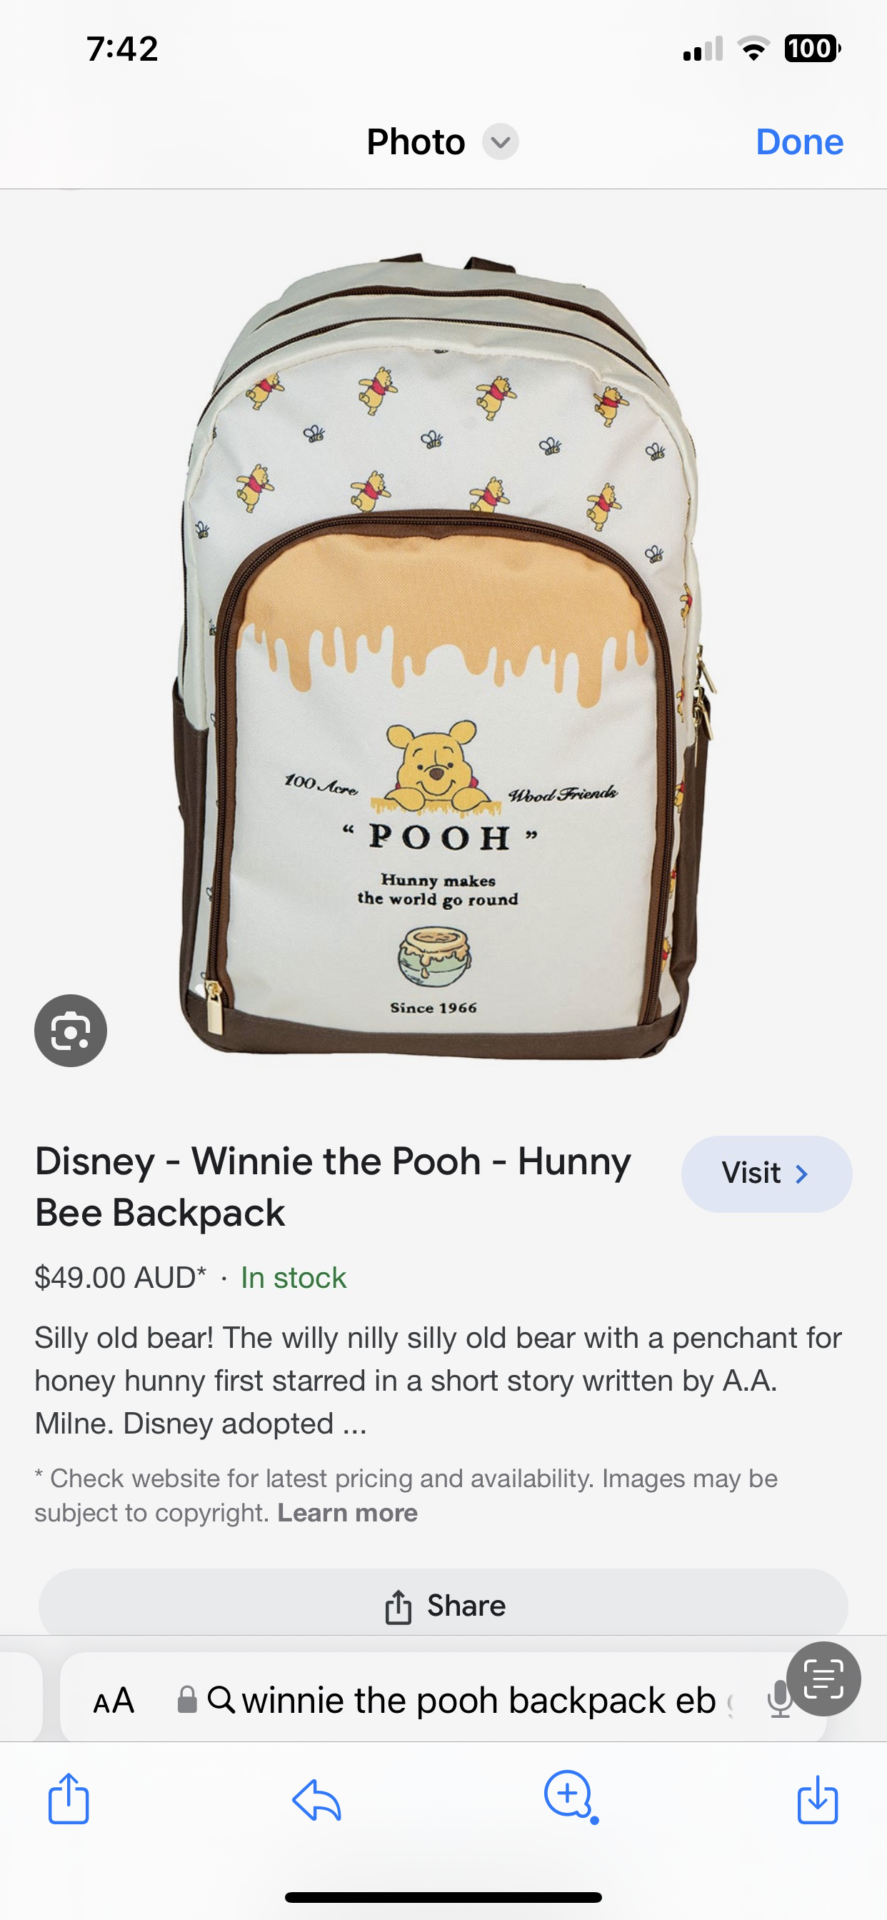 Disney - Winnie the Pooh - Hunny Bee Backpack